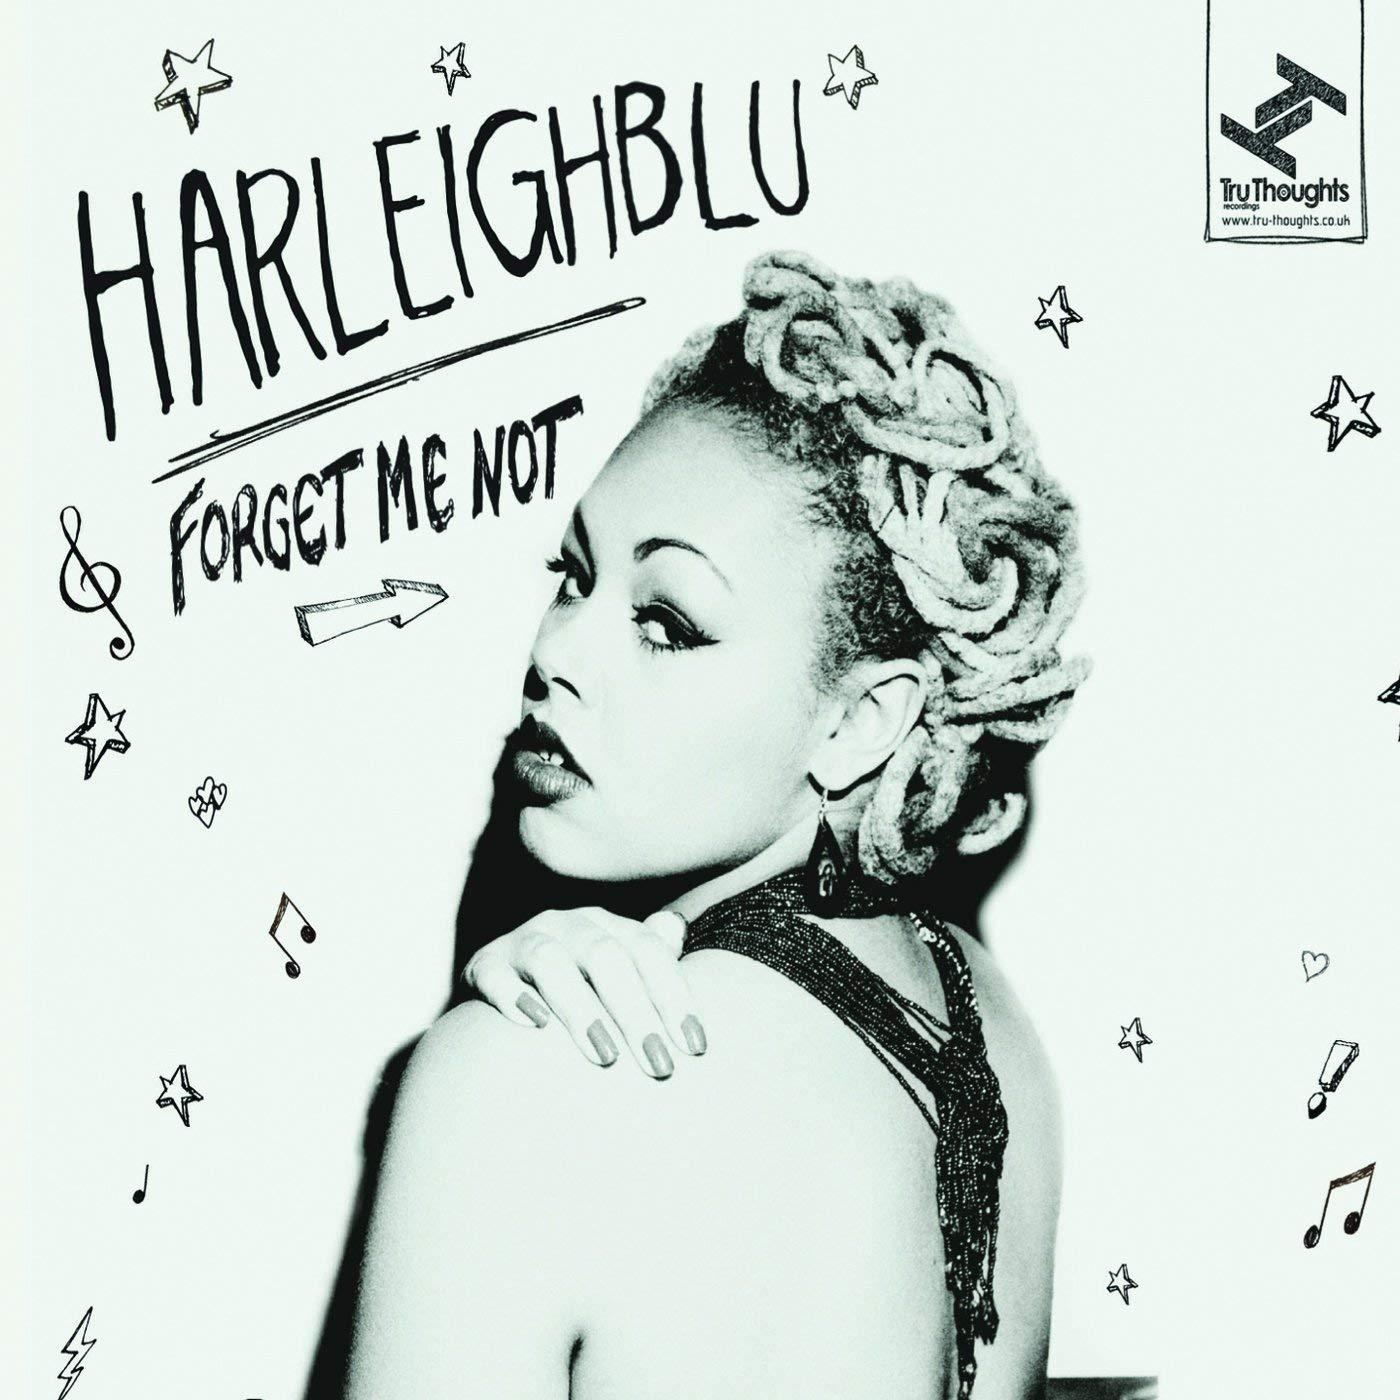 Forget Me Not / Harleighblu